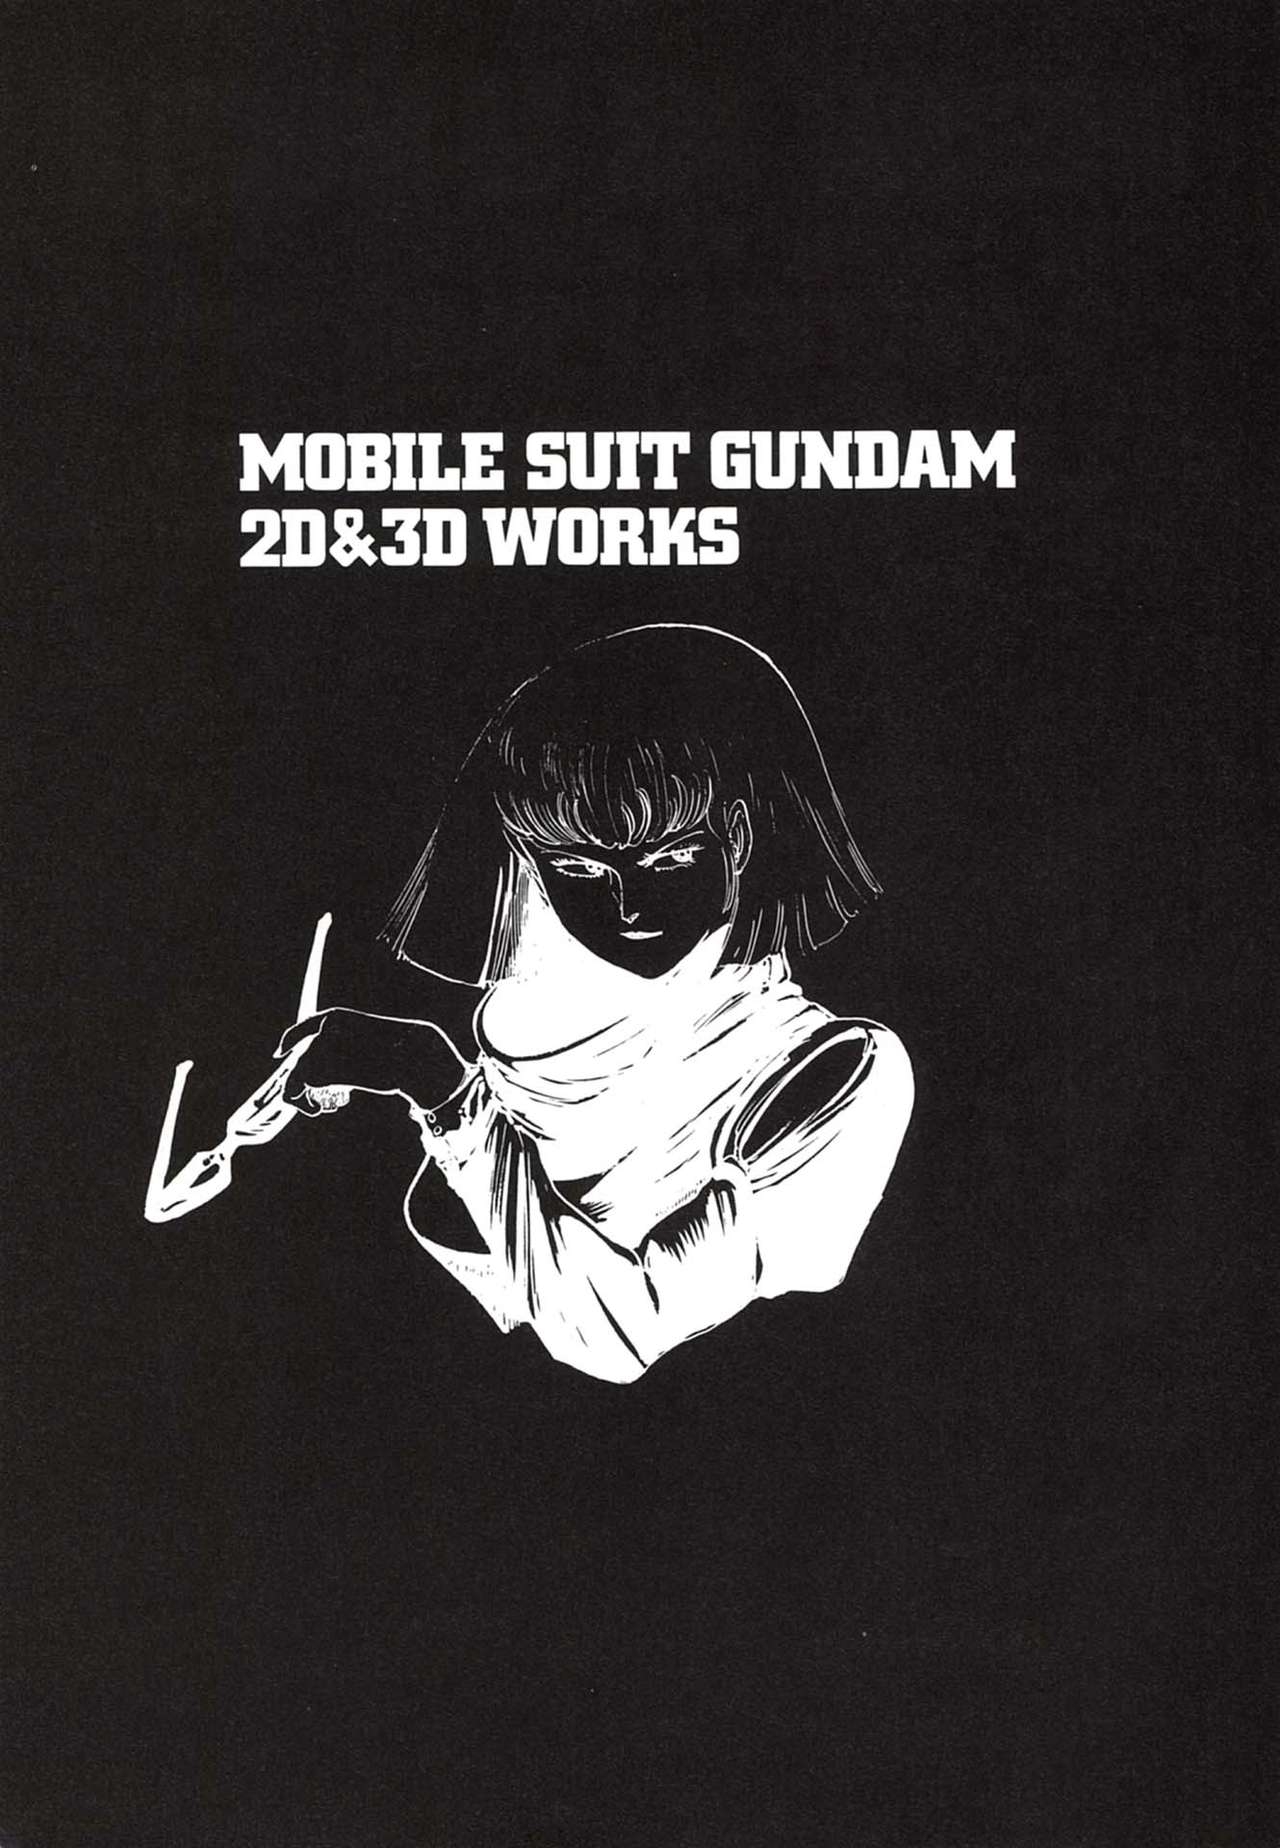 [Kazuhisa Kondo] Kazuhisa Kondo 2D & 3D Works - Go Ahead - From Mobile Suit Gundam to Original Mechanism 10